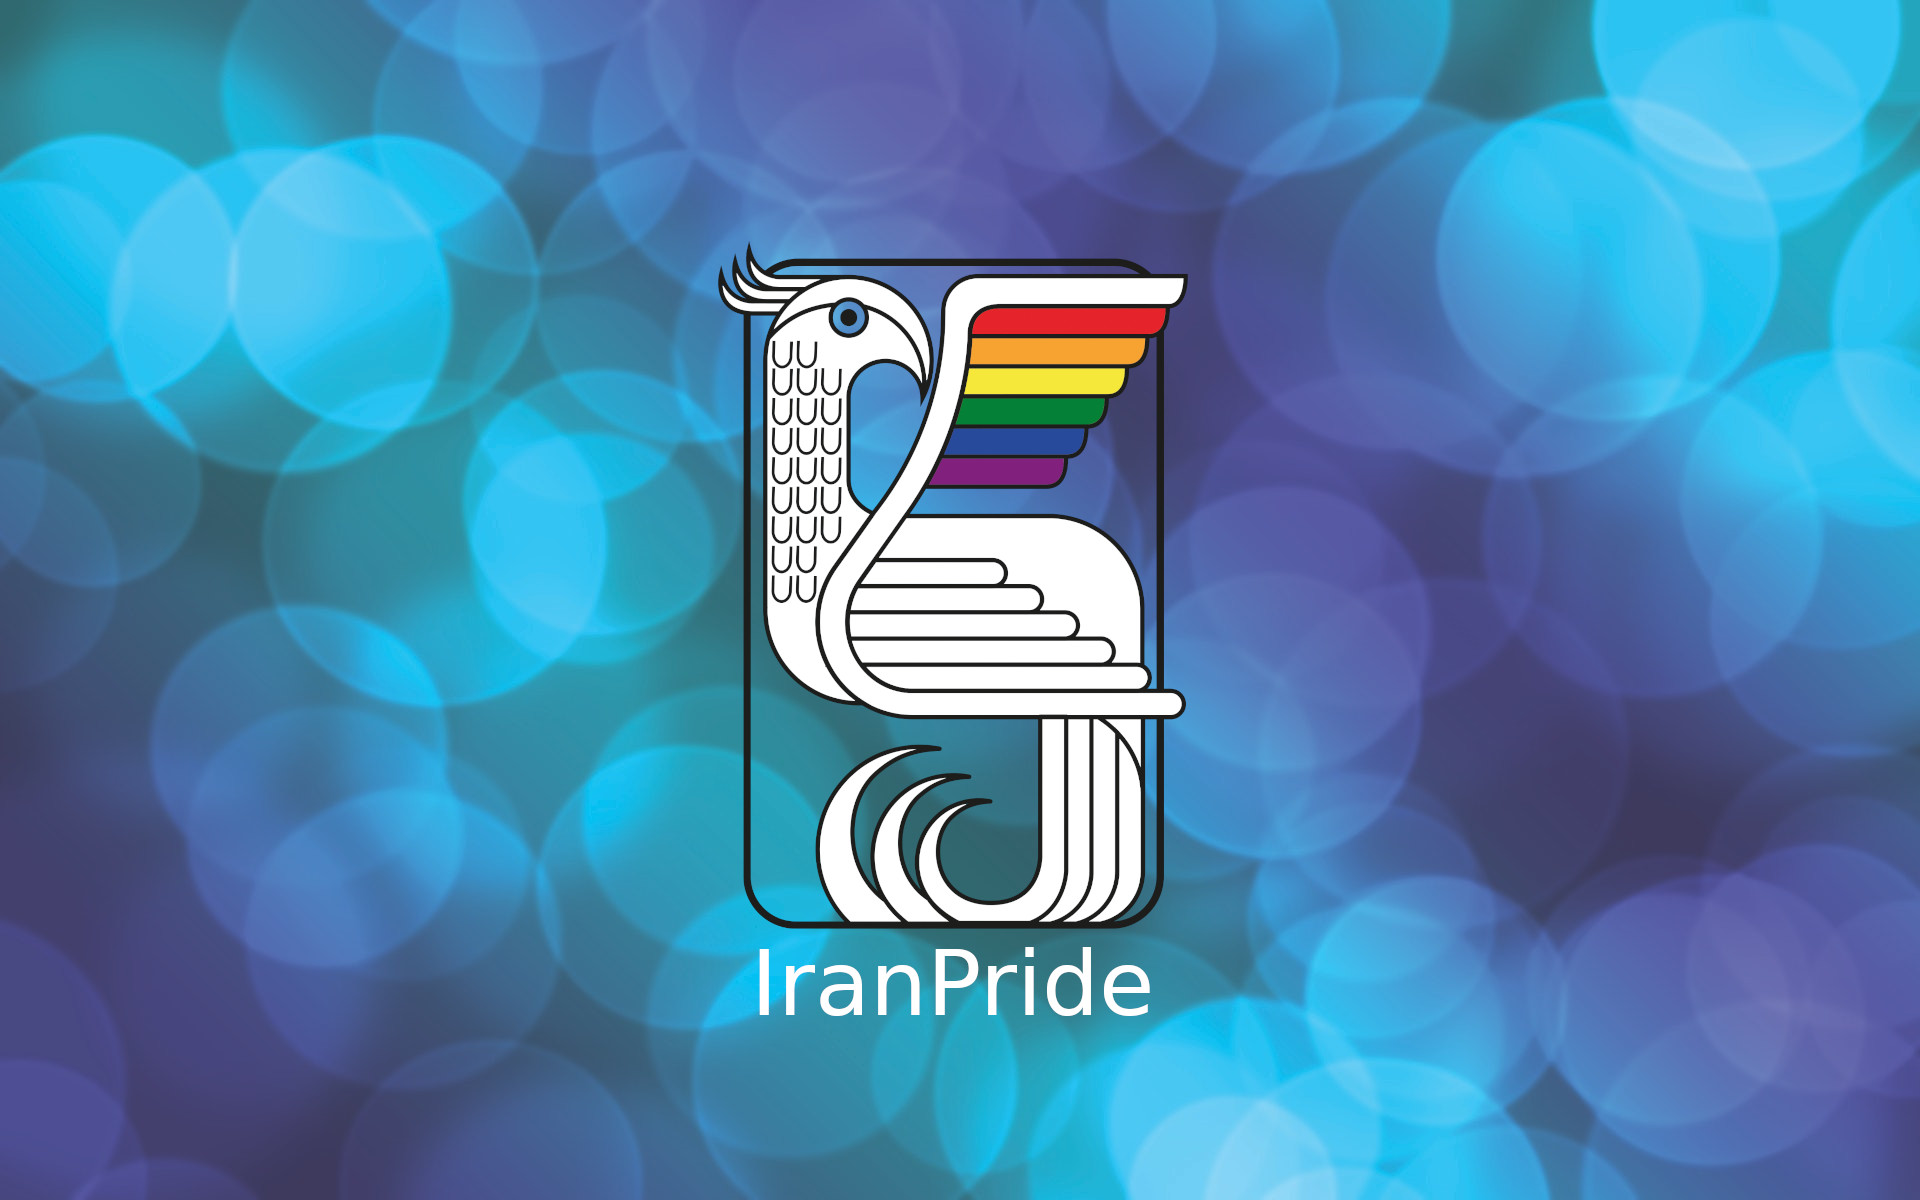 Iran Pride logo on a blured blue background